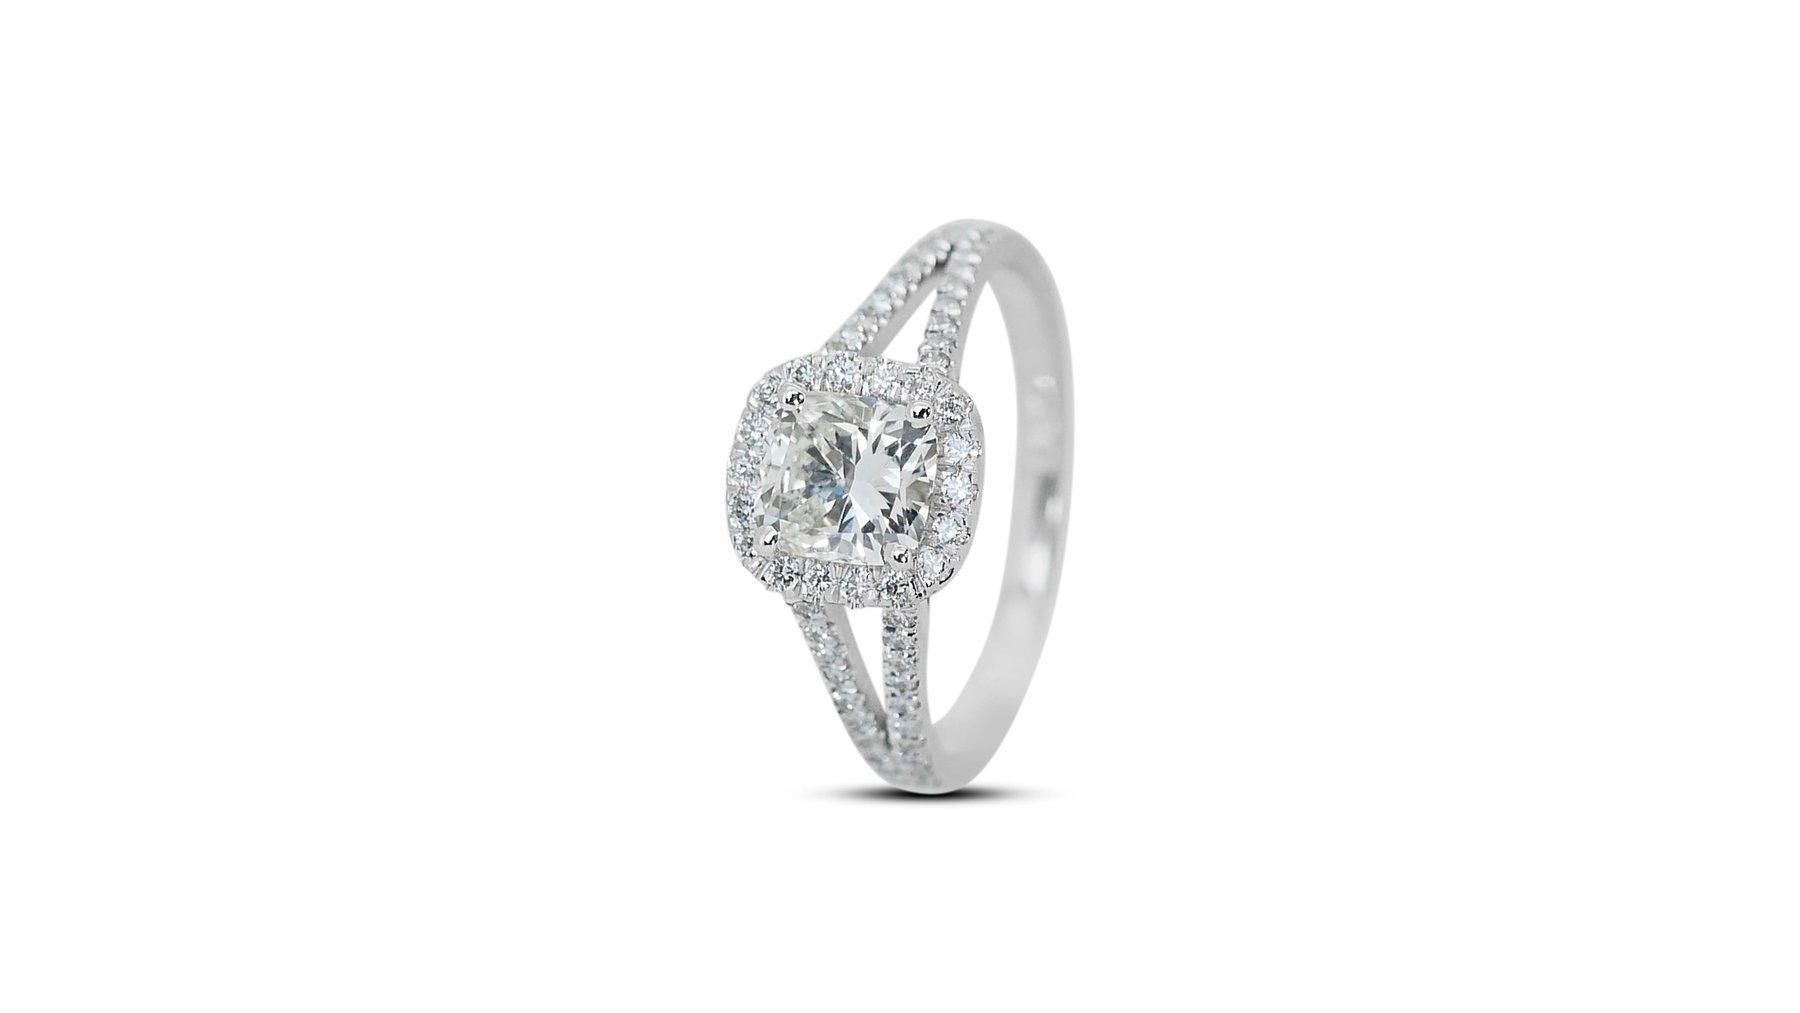 Cushion Cut Captivating Ring features a Dazzling 1.01 carat cushion cut Natural Diamond